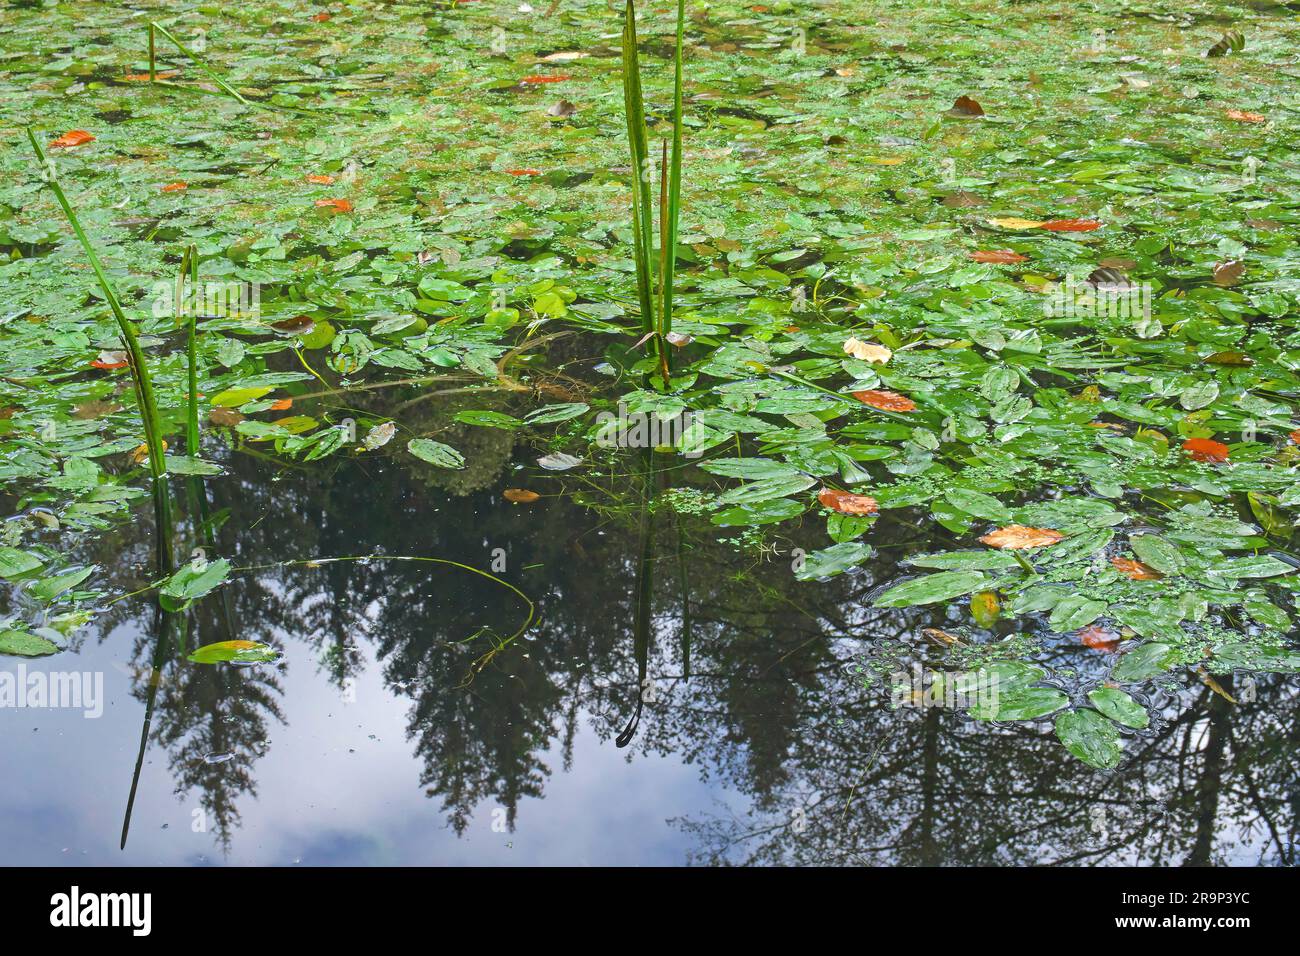 Floating-leaf pondweed (Potamogeton natans). Floating leaves on the surface of a pond. Bavaria, Germany Stock Photo